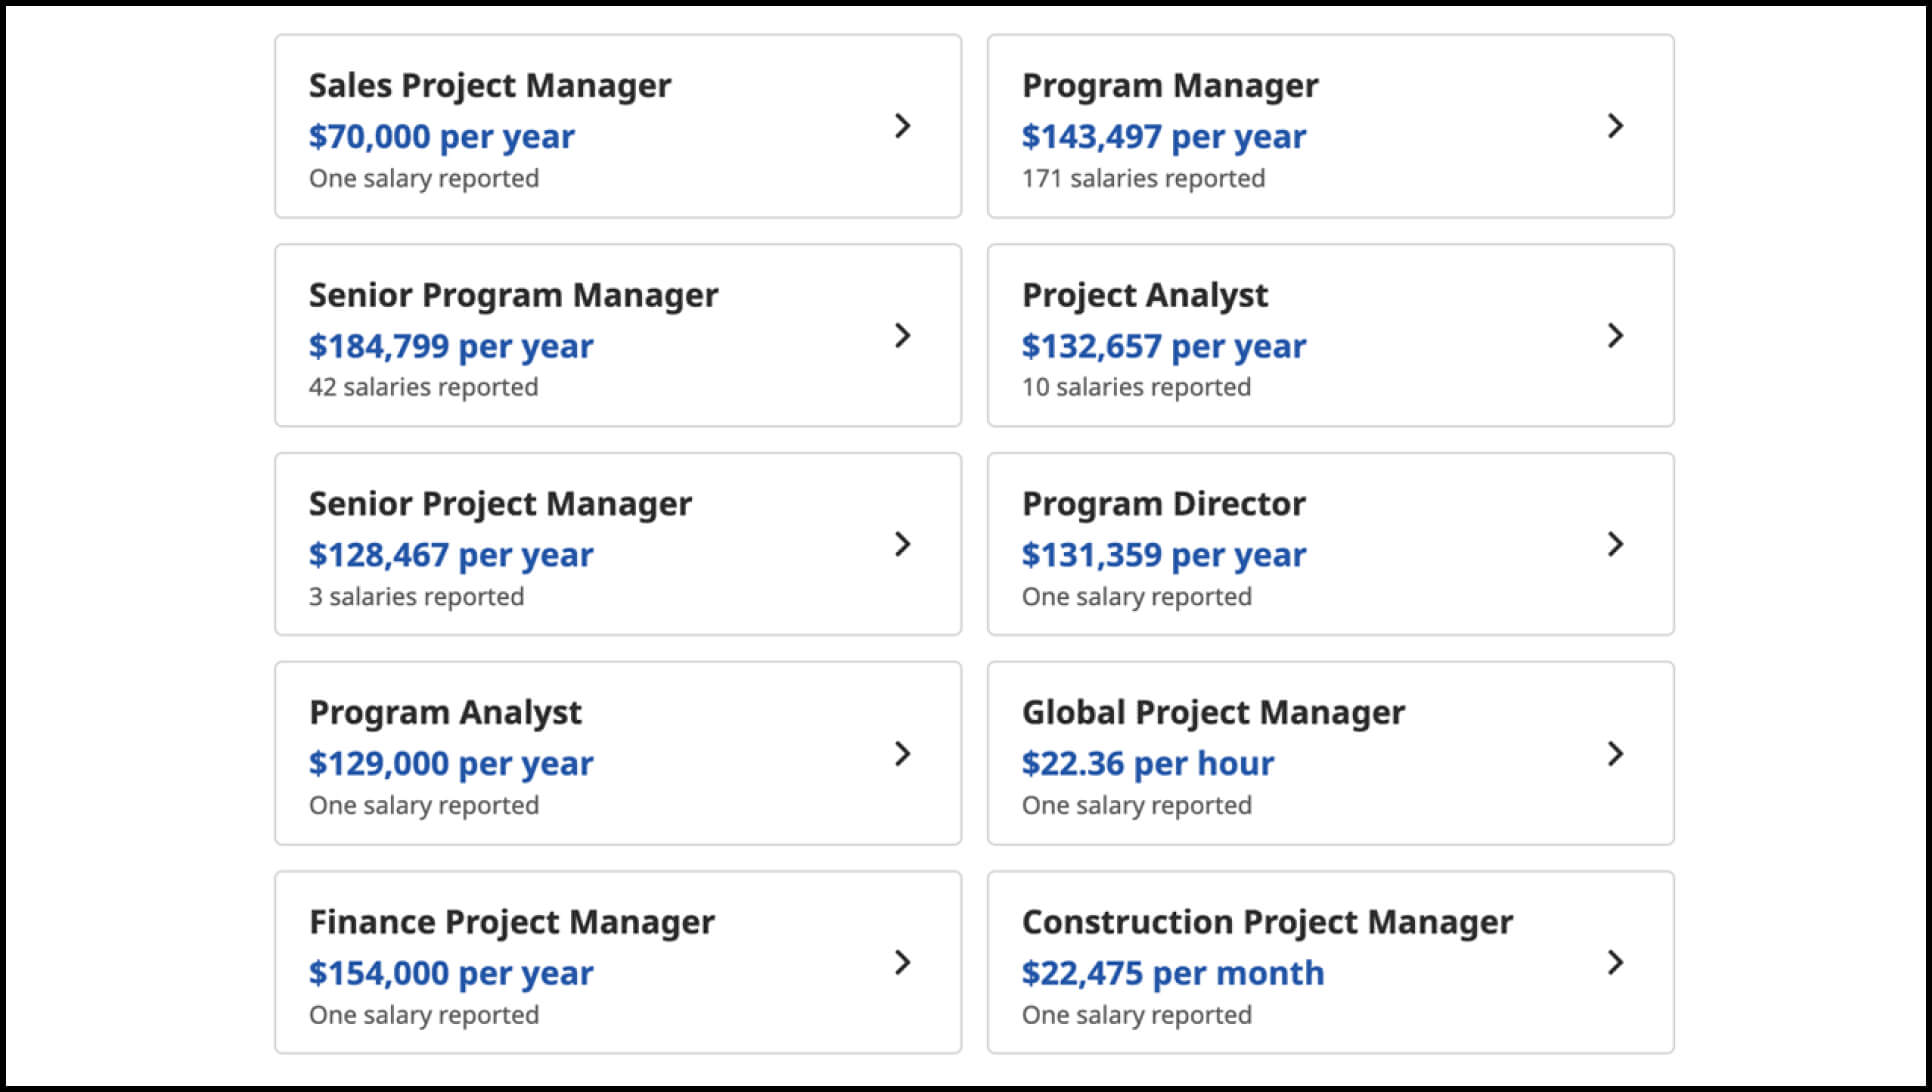 glassdoor website screenshot showing projectr manager salaries at google based on job titles